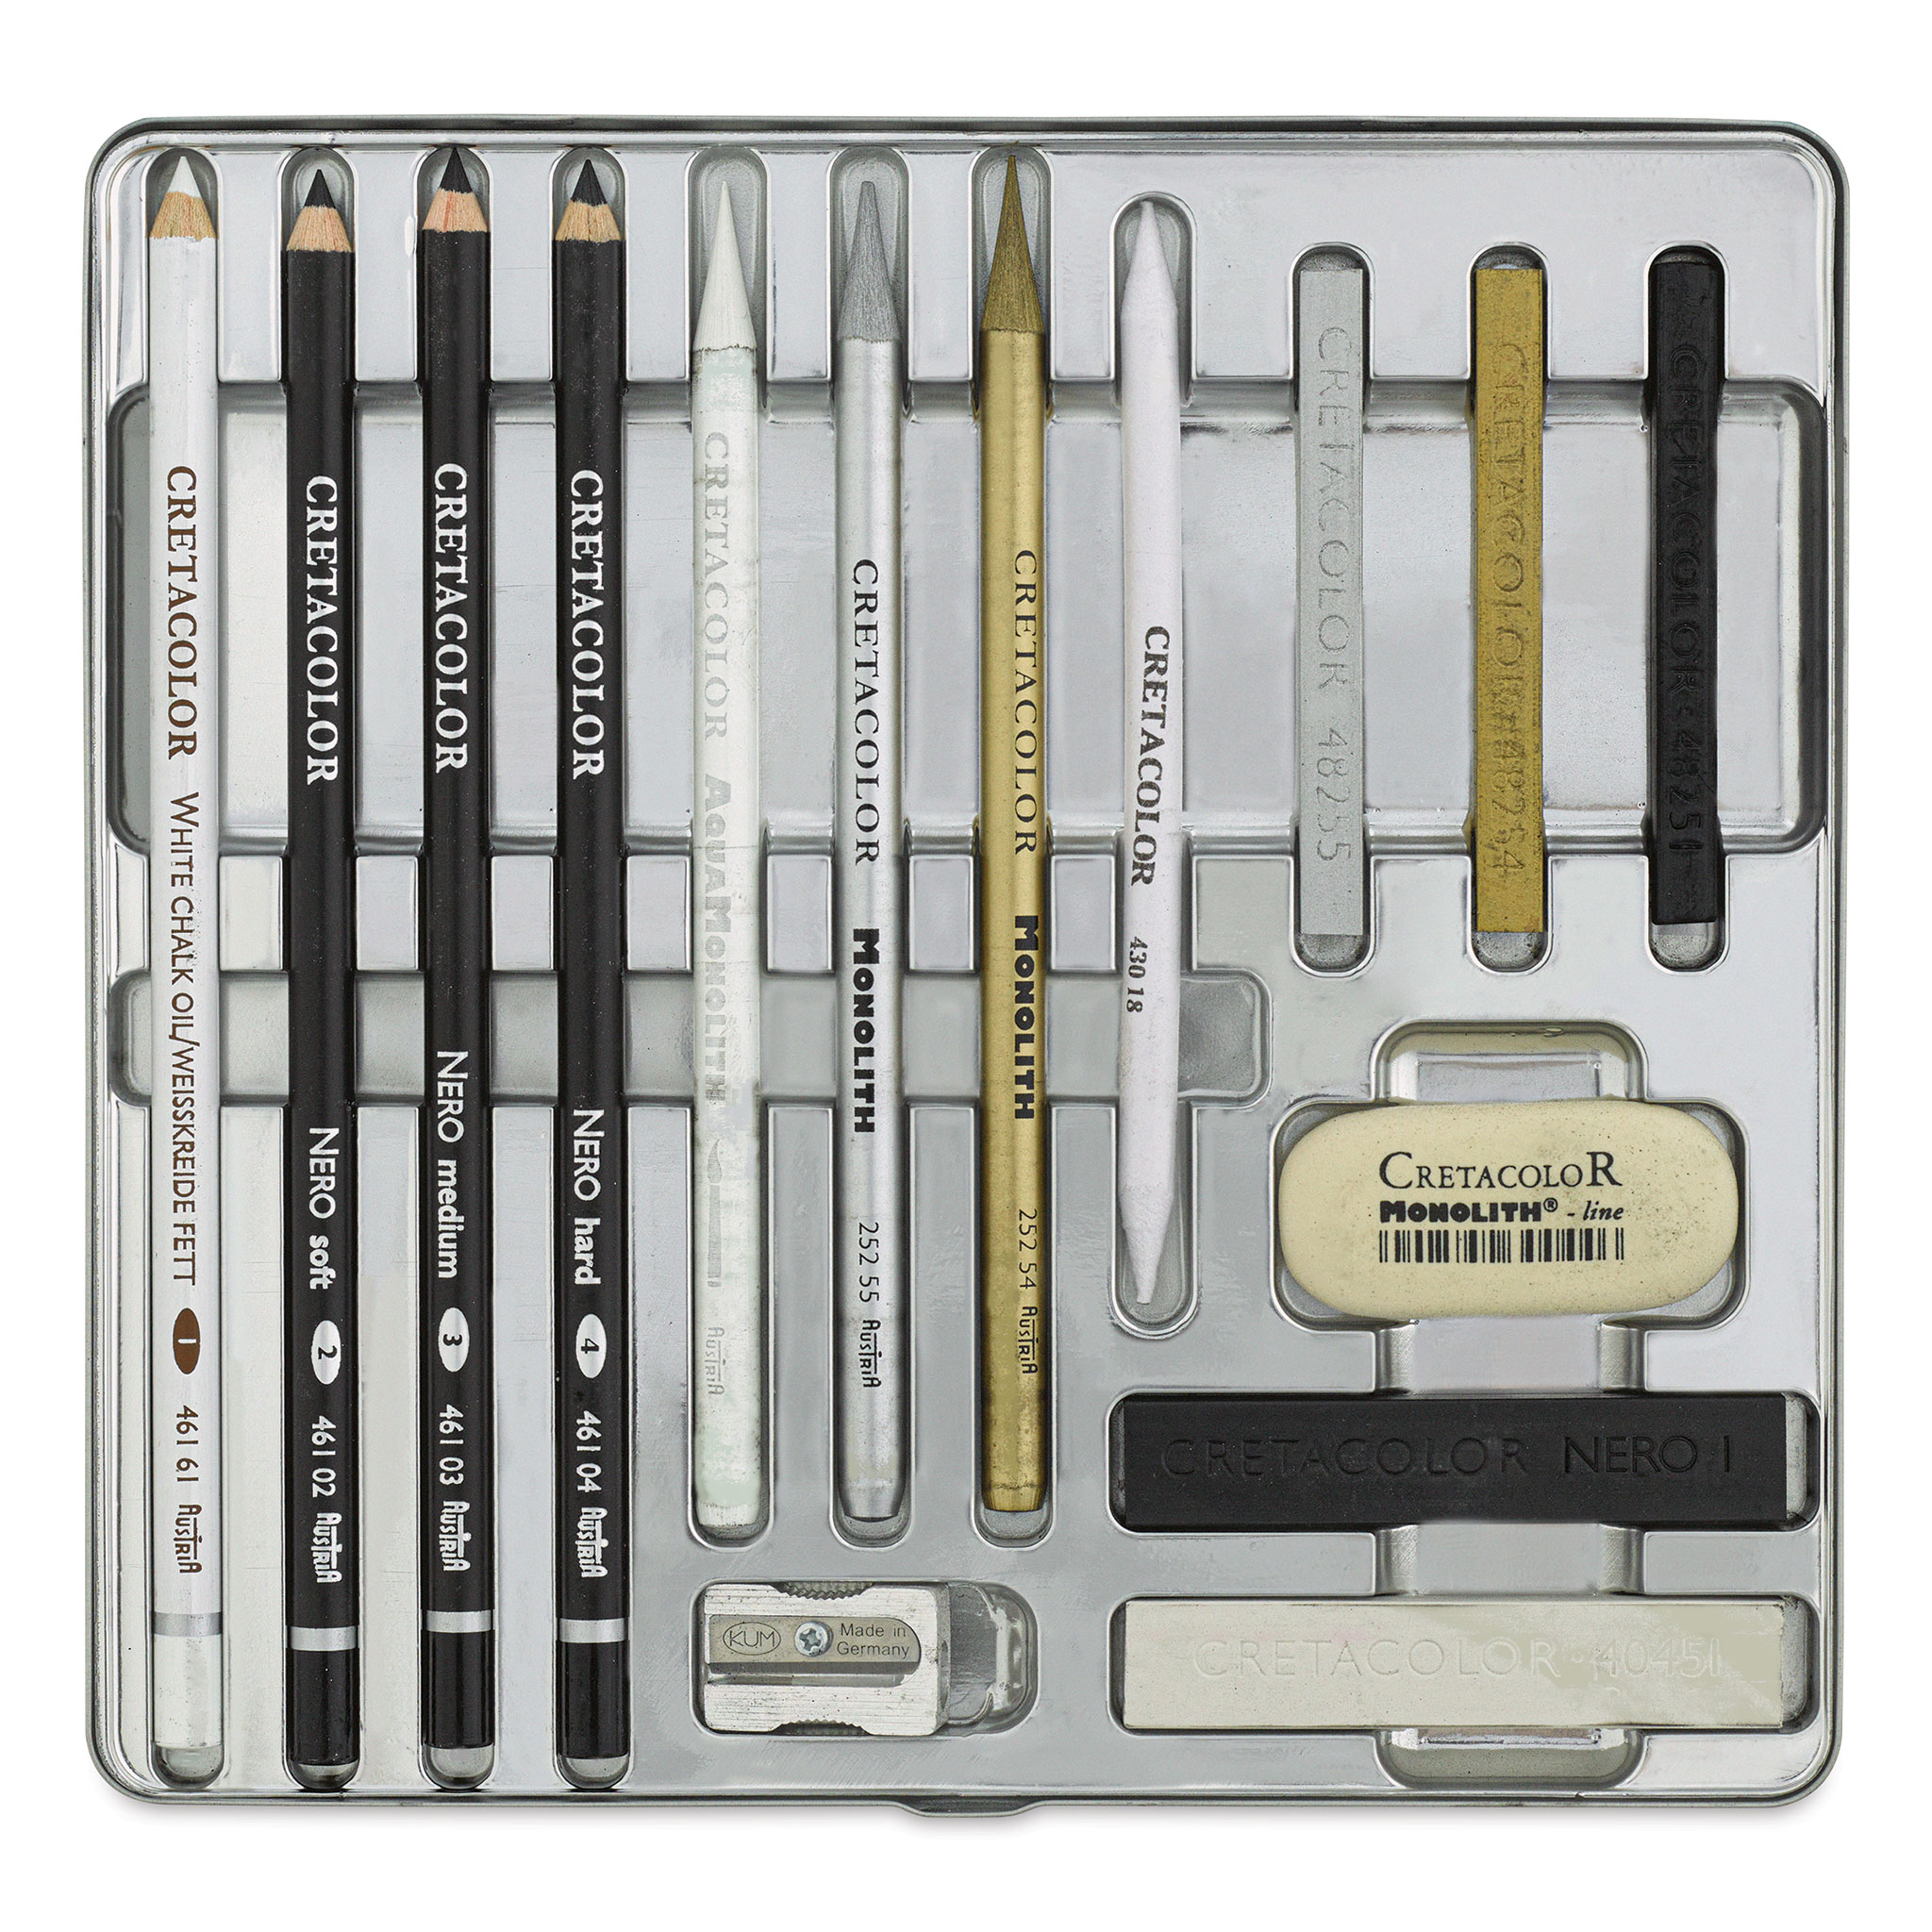 Cretacolor Oil Pencils and Sets